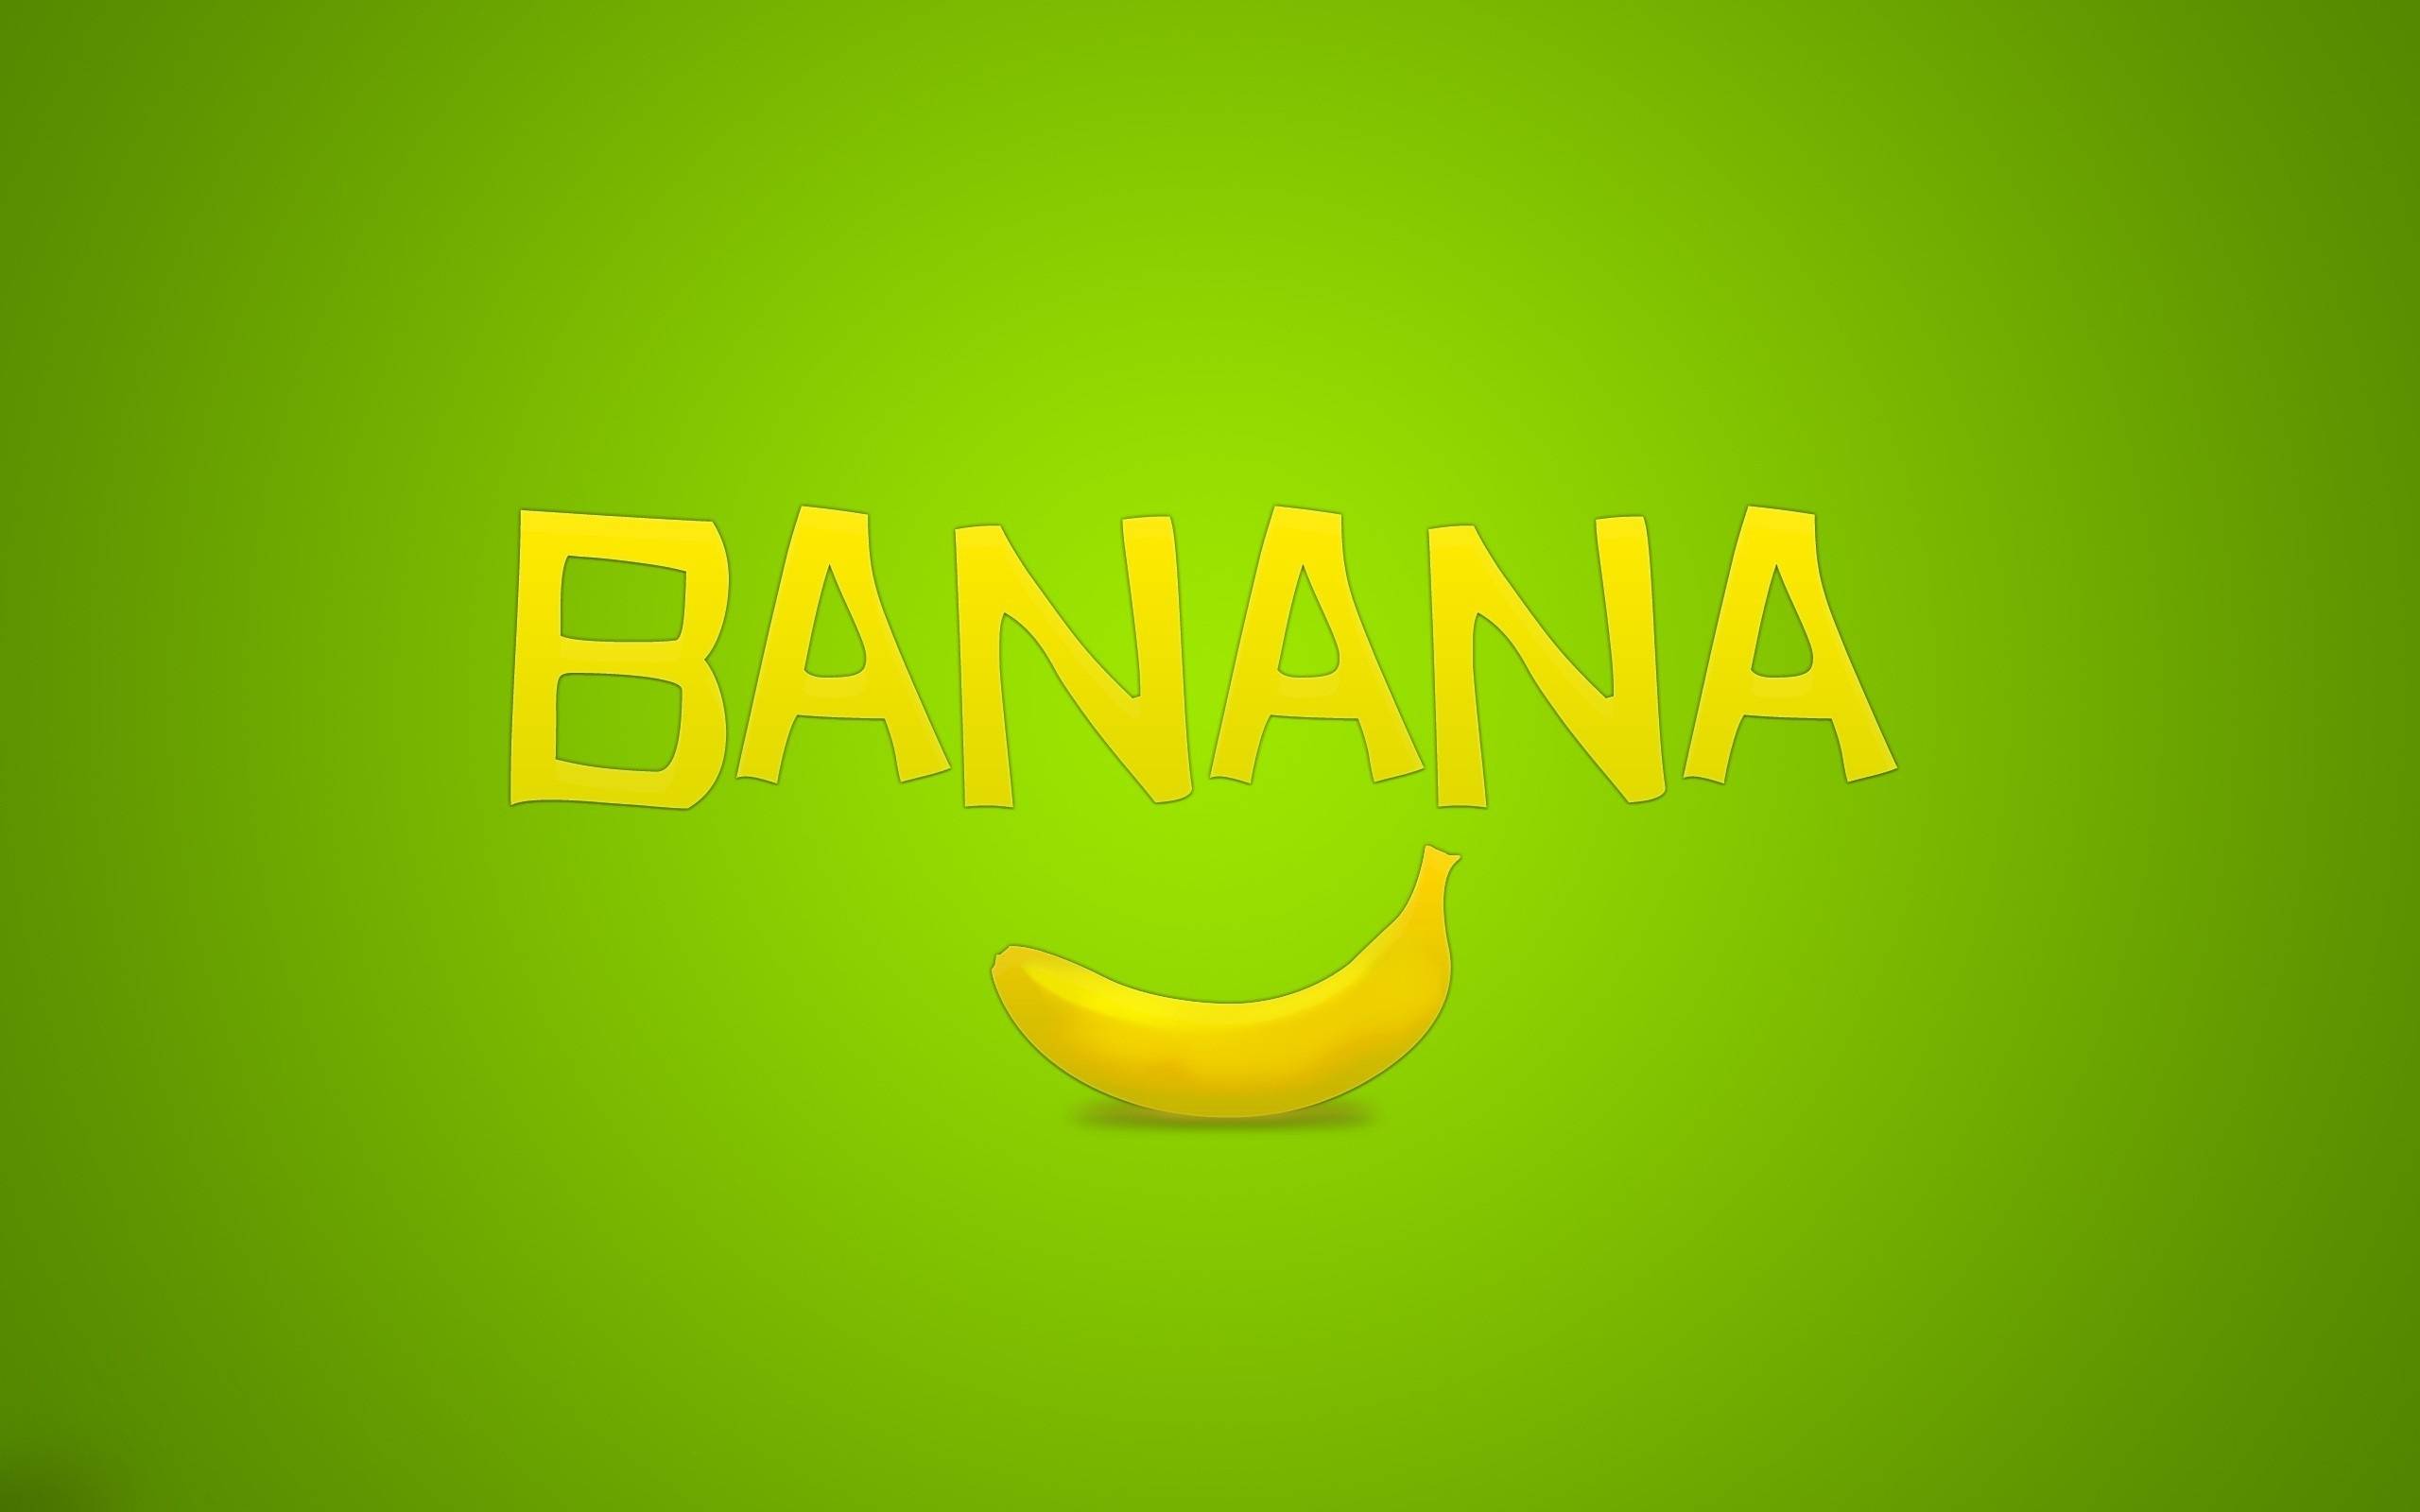 Wallpapers drawing banana inscription on the desktop